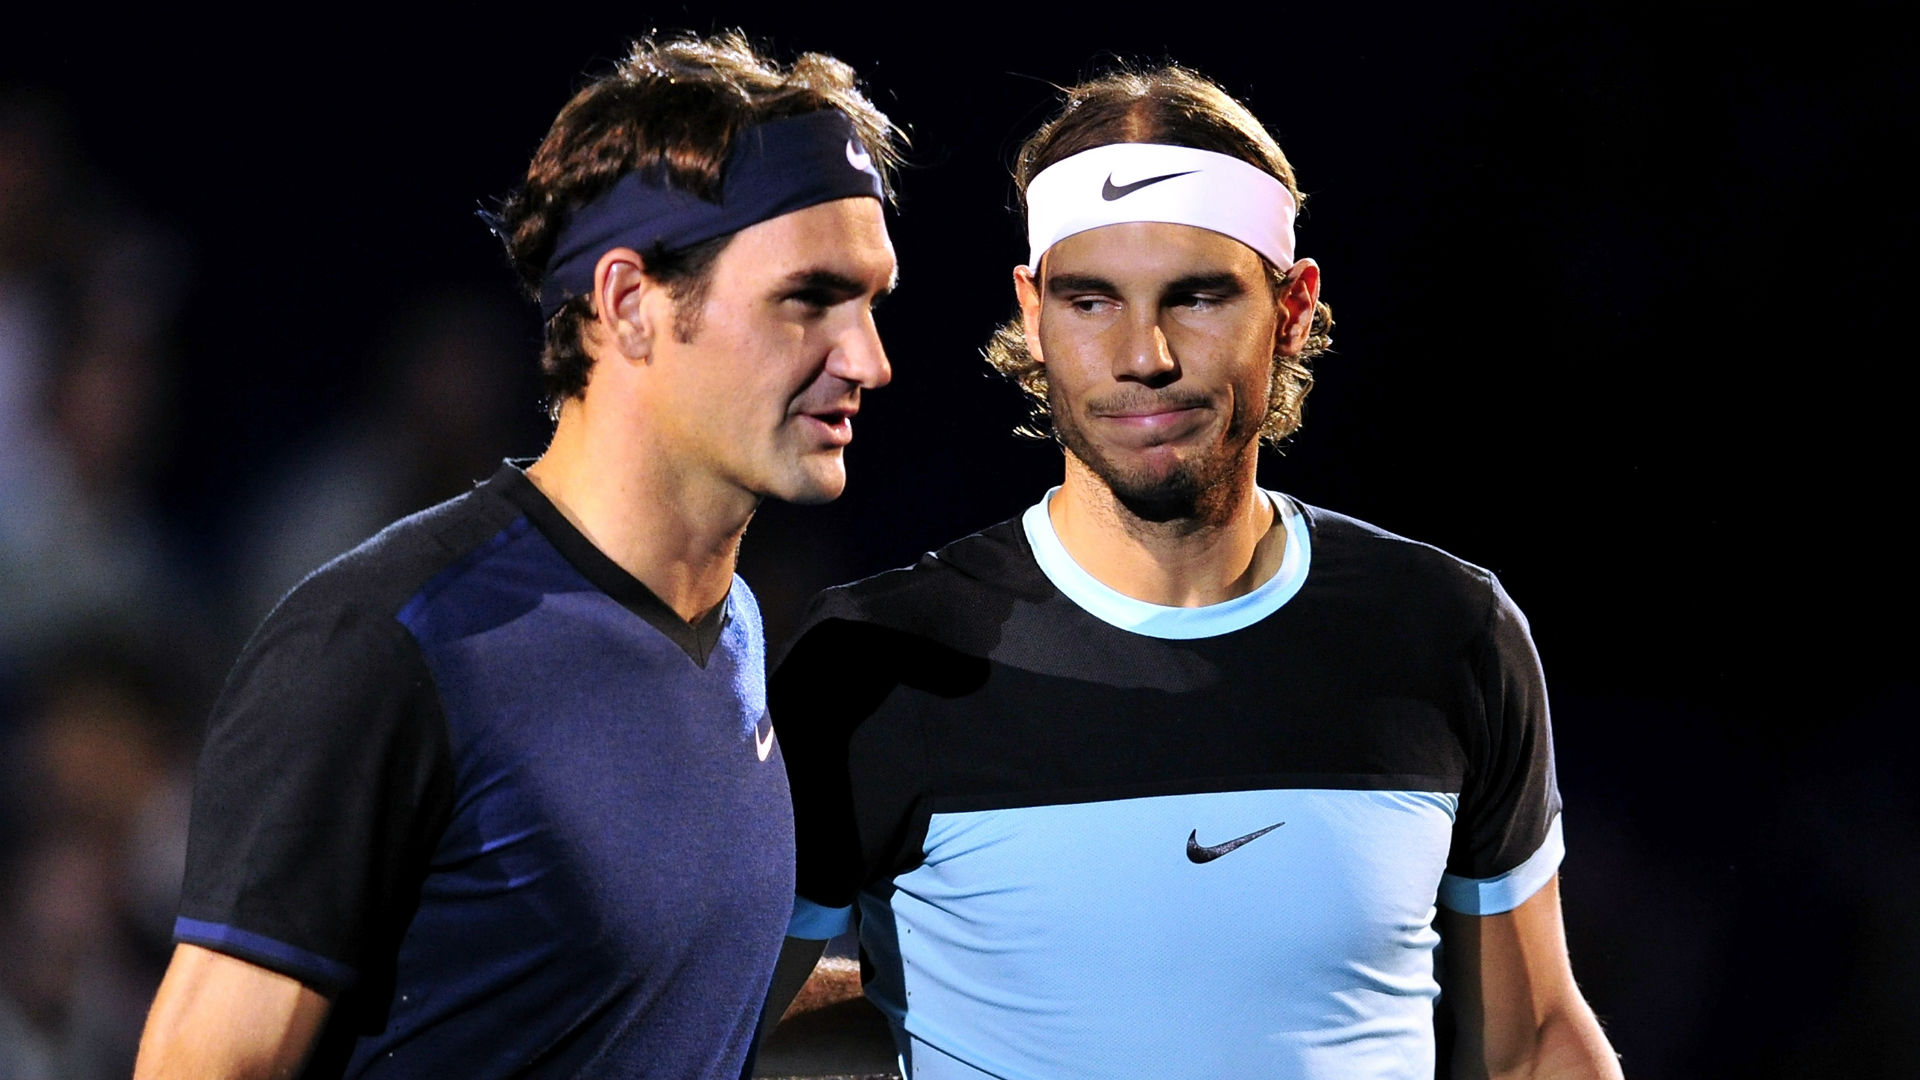 A Classic Rivalry Rekindled: Can Roger Federer End Major Hoodoo Against Rafael Nadal?